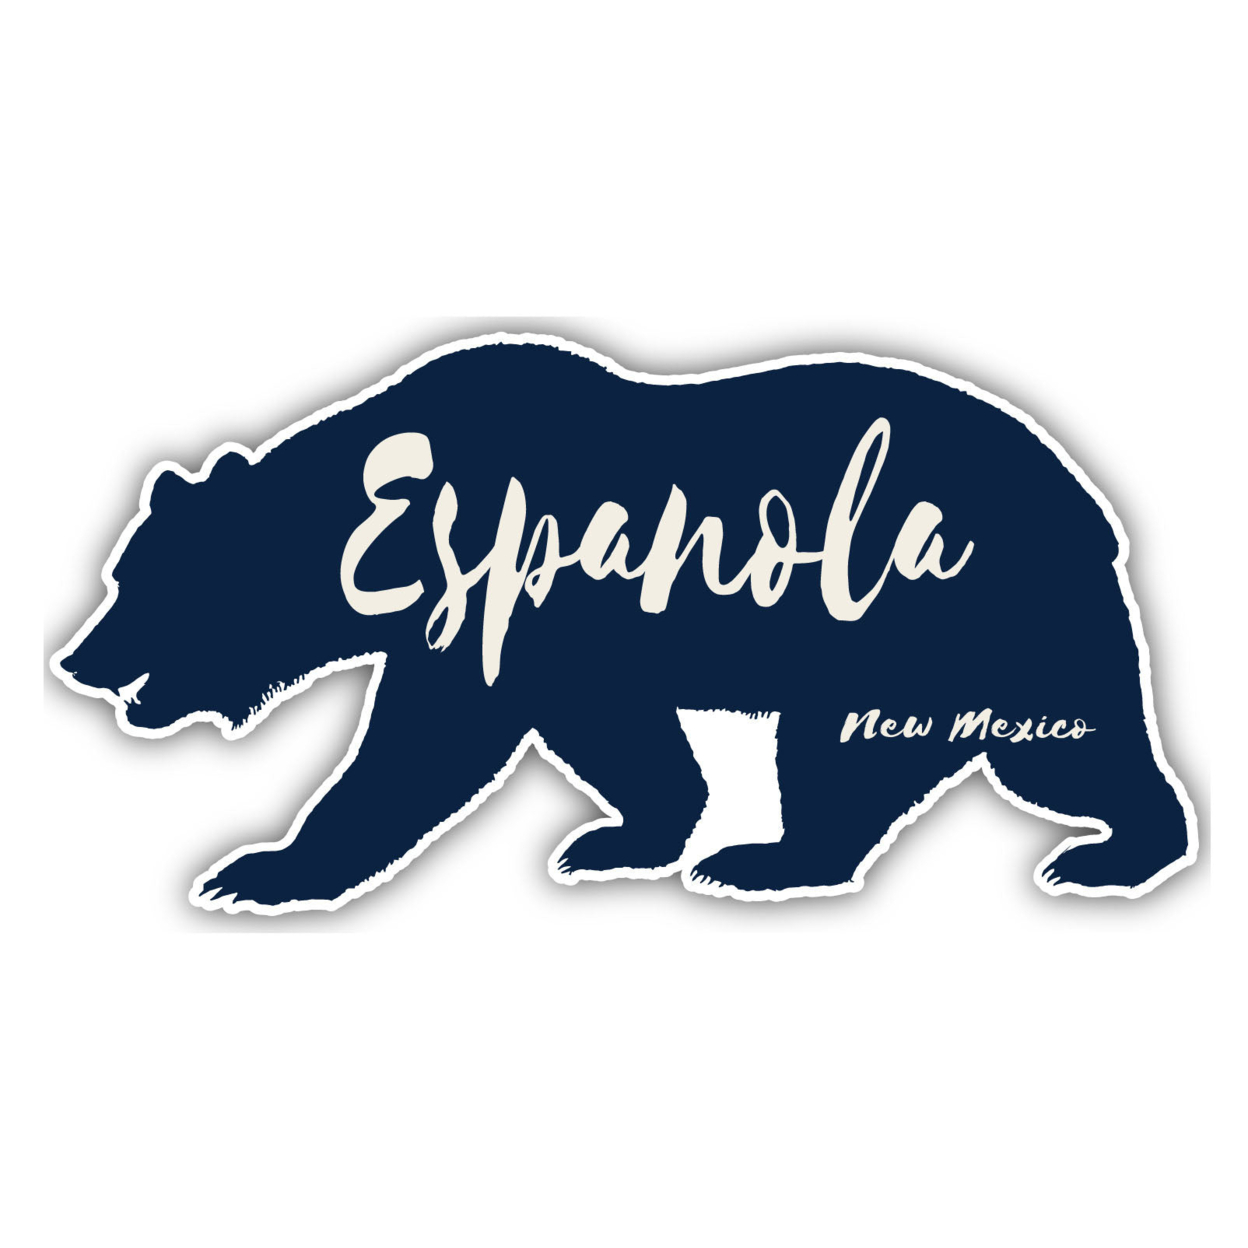 Espanola New Mexico Souvenir Decorative Stickers (Choose Theme And Size) - 4-Pack, 4-Inch, Bear